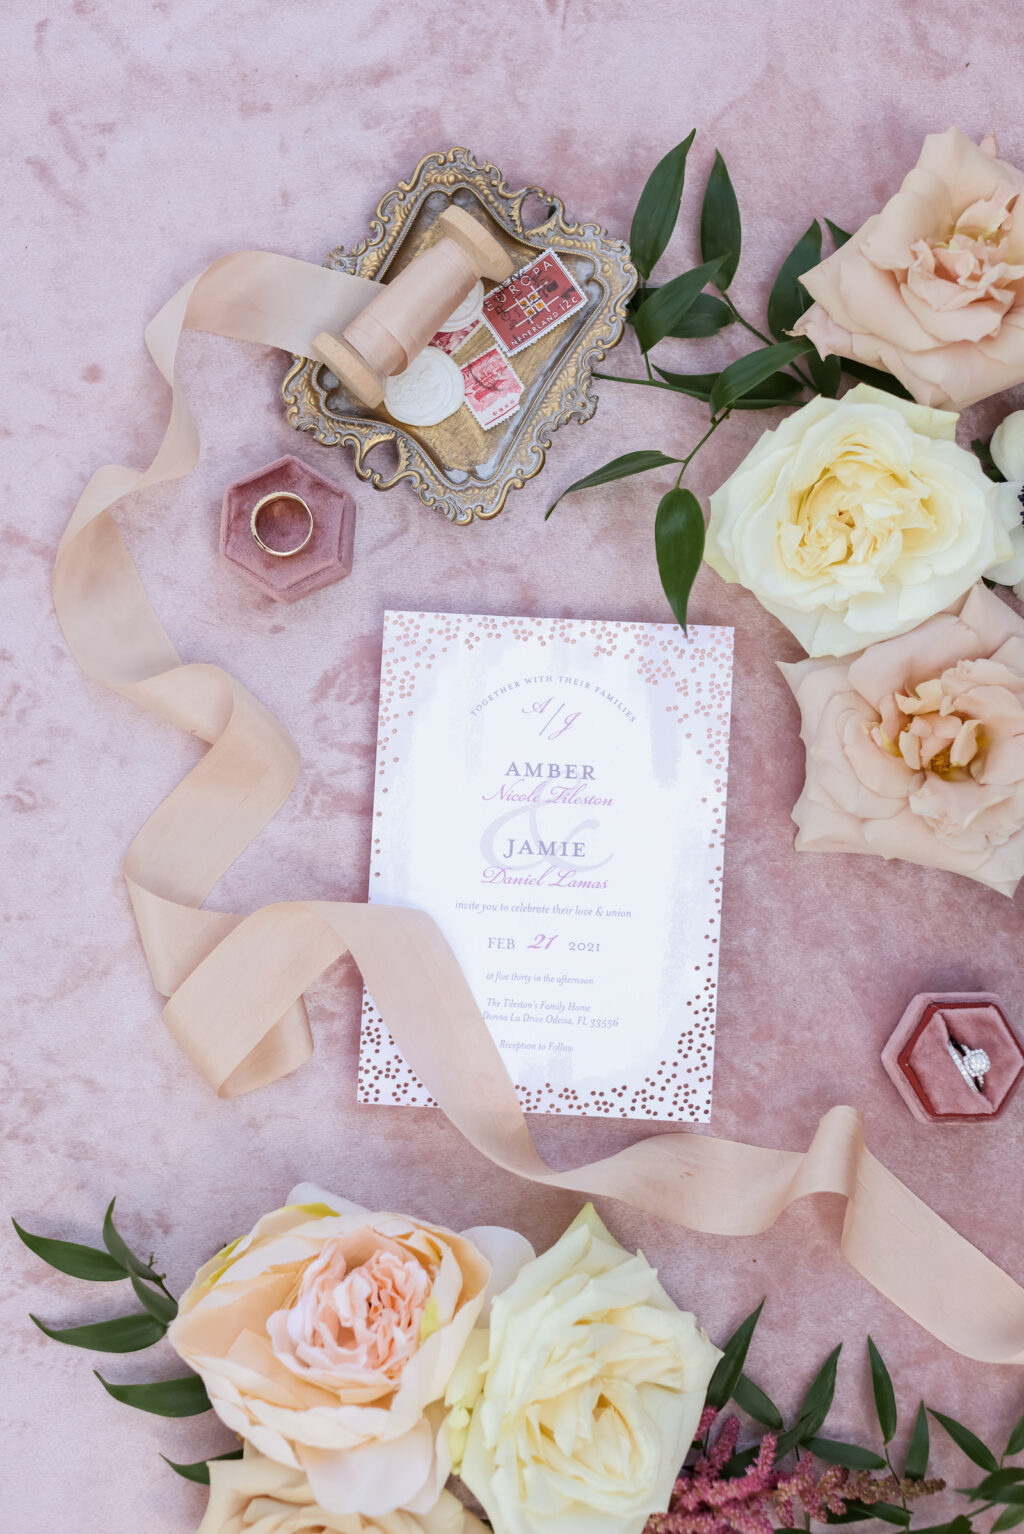 Elegant Romantic Pink and White Wedding Invitation, Pink Hexagonal Velvet Ring Box | Tampa Bay Wedding Photographer Lifelong Photography Studio